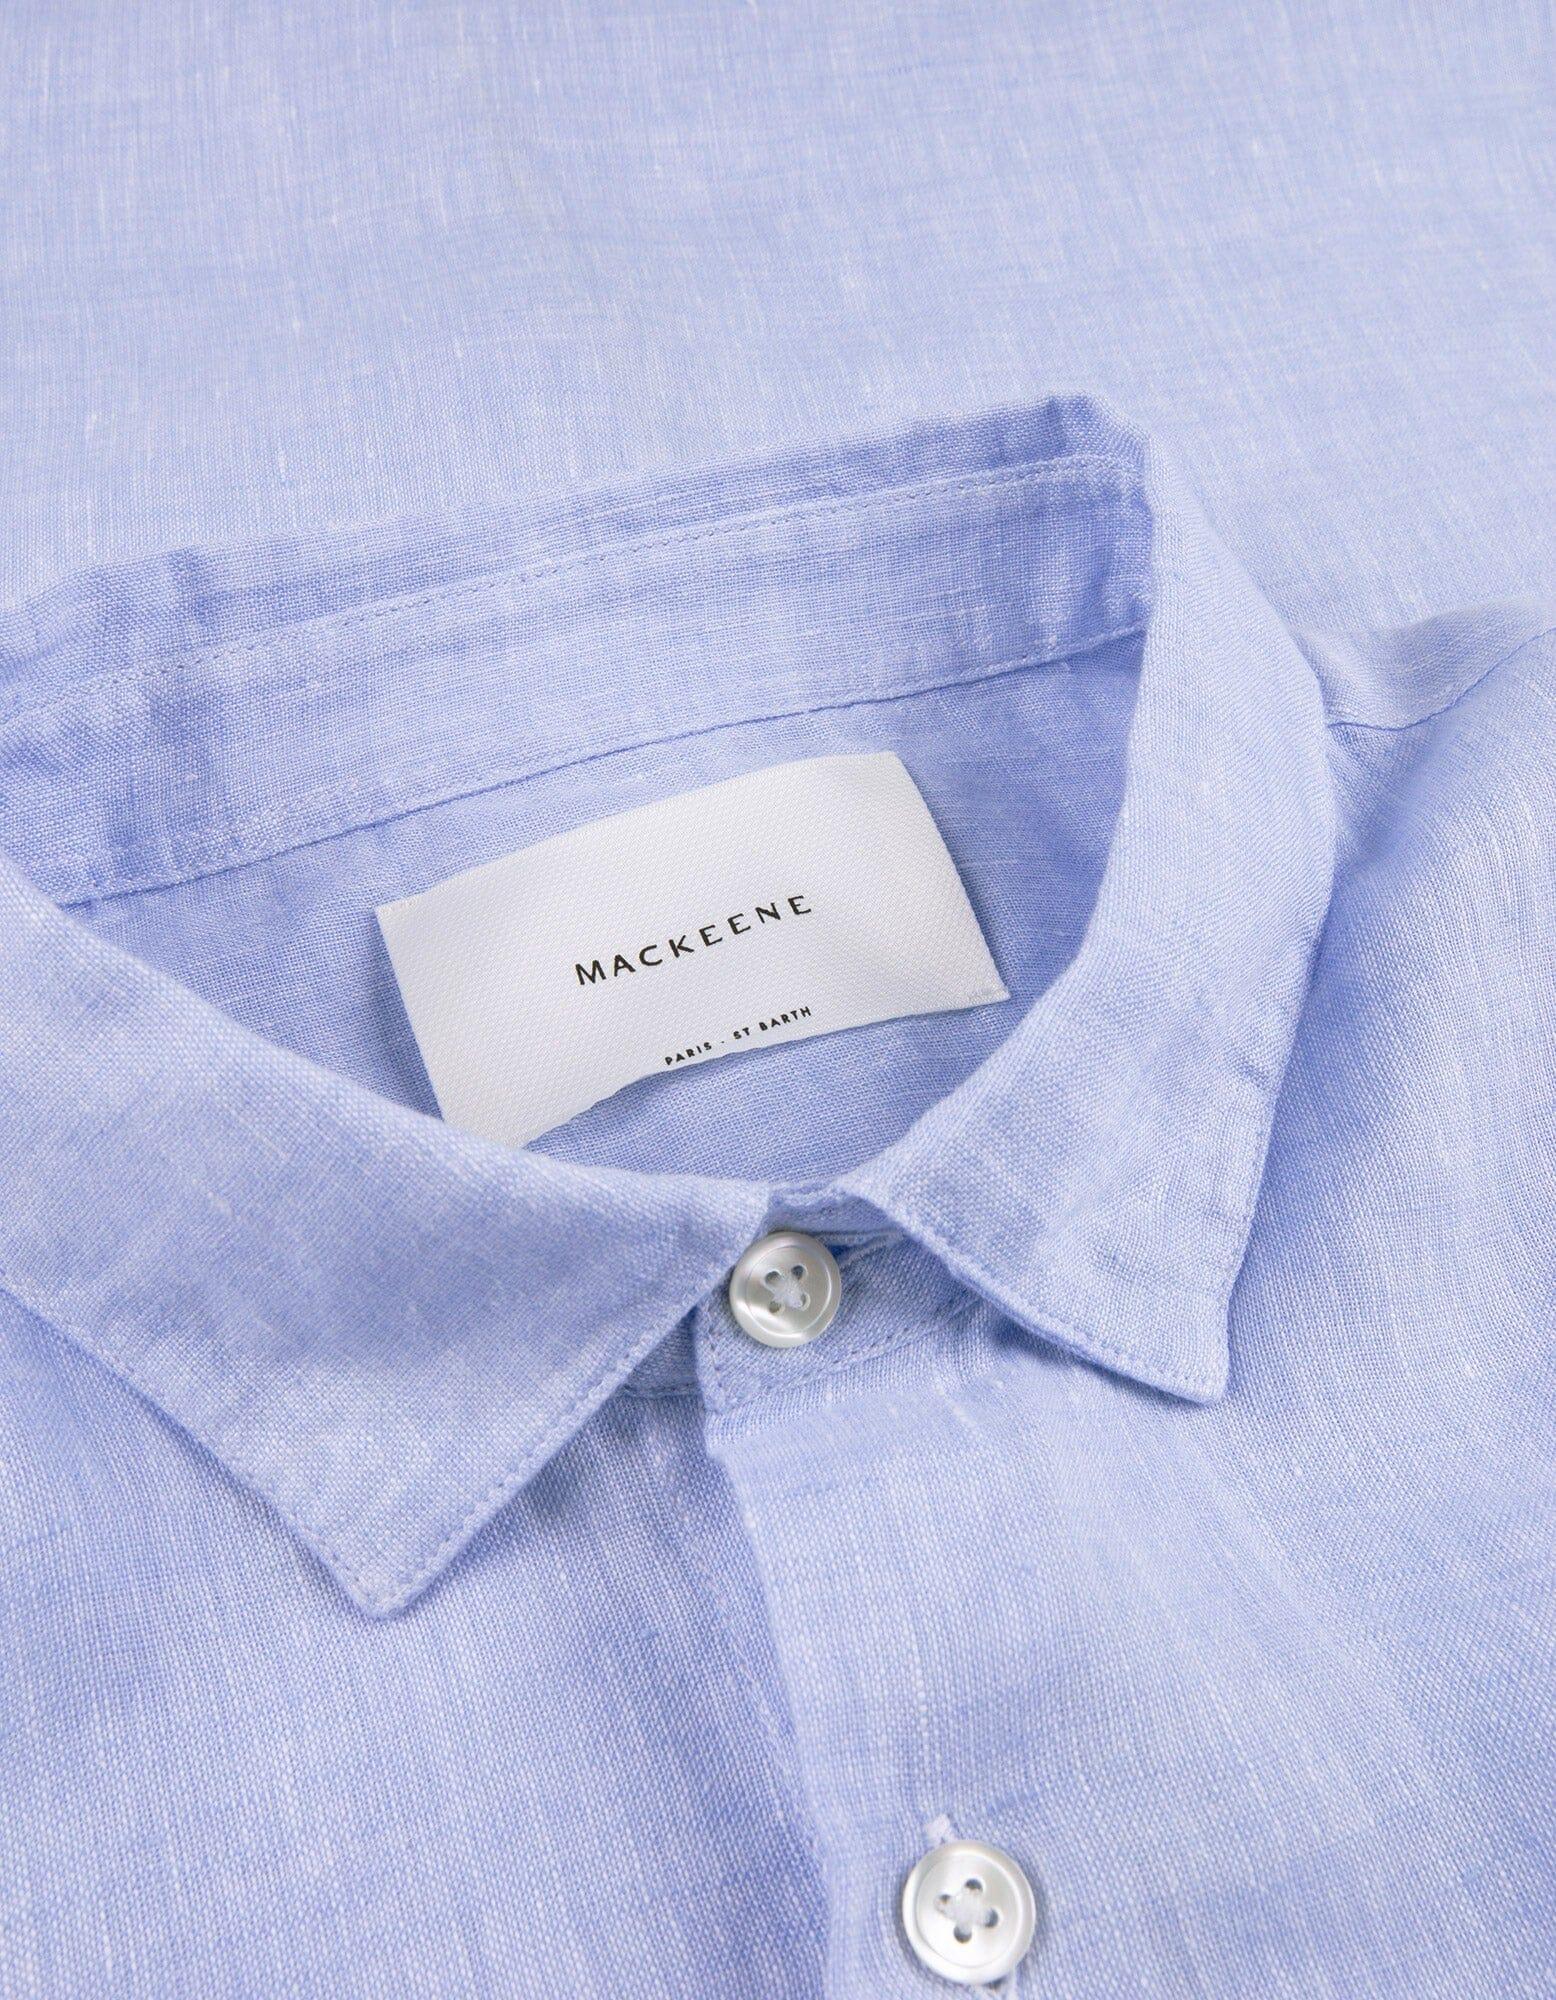 Harry L - 03. Light Blue Shirts - Harry L MACKEENE 